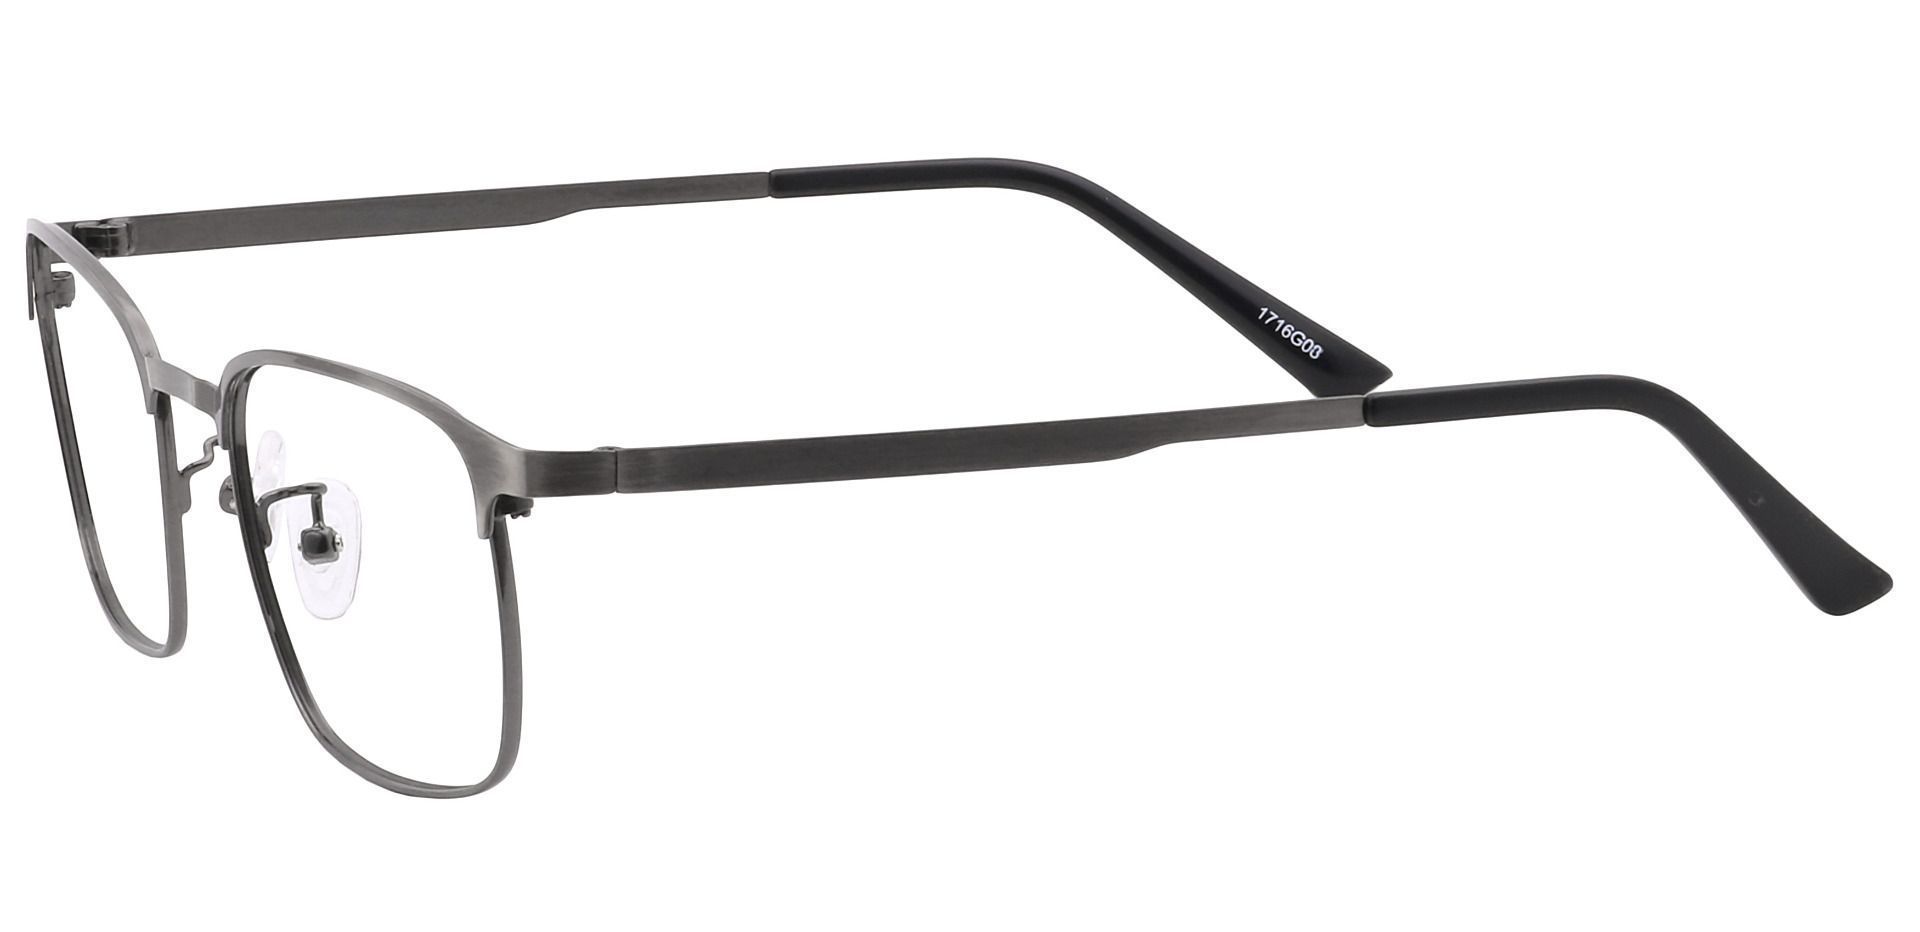 Kingston Square Lined Bifocal Glasses - Gray